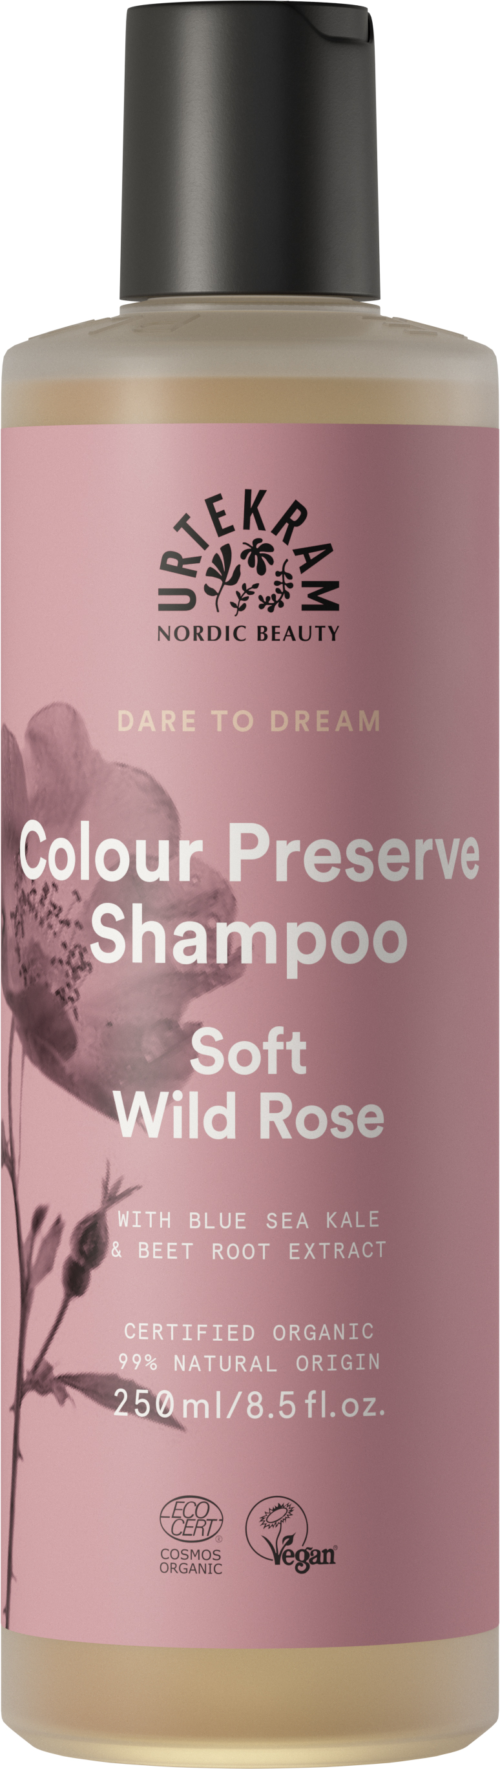 Shampoo soft wild rose 250ml Urtekram